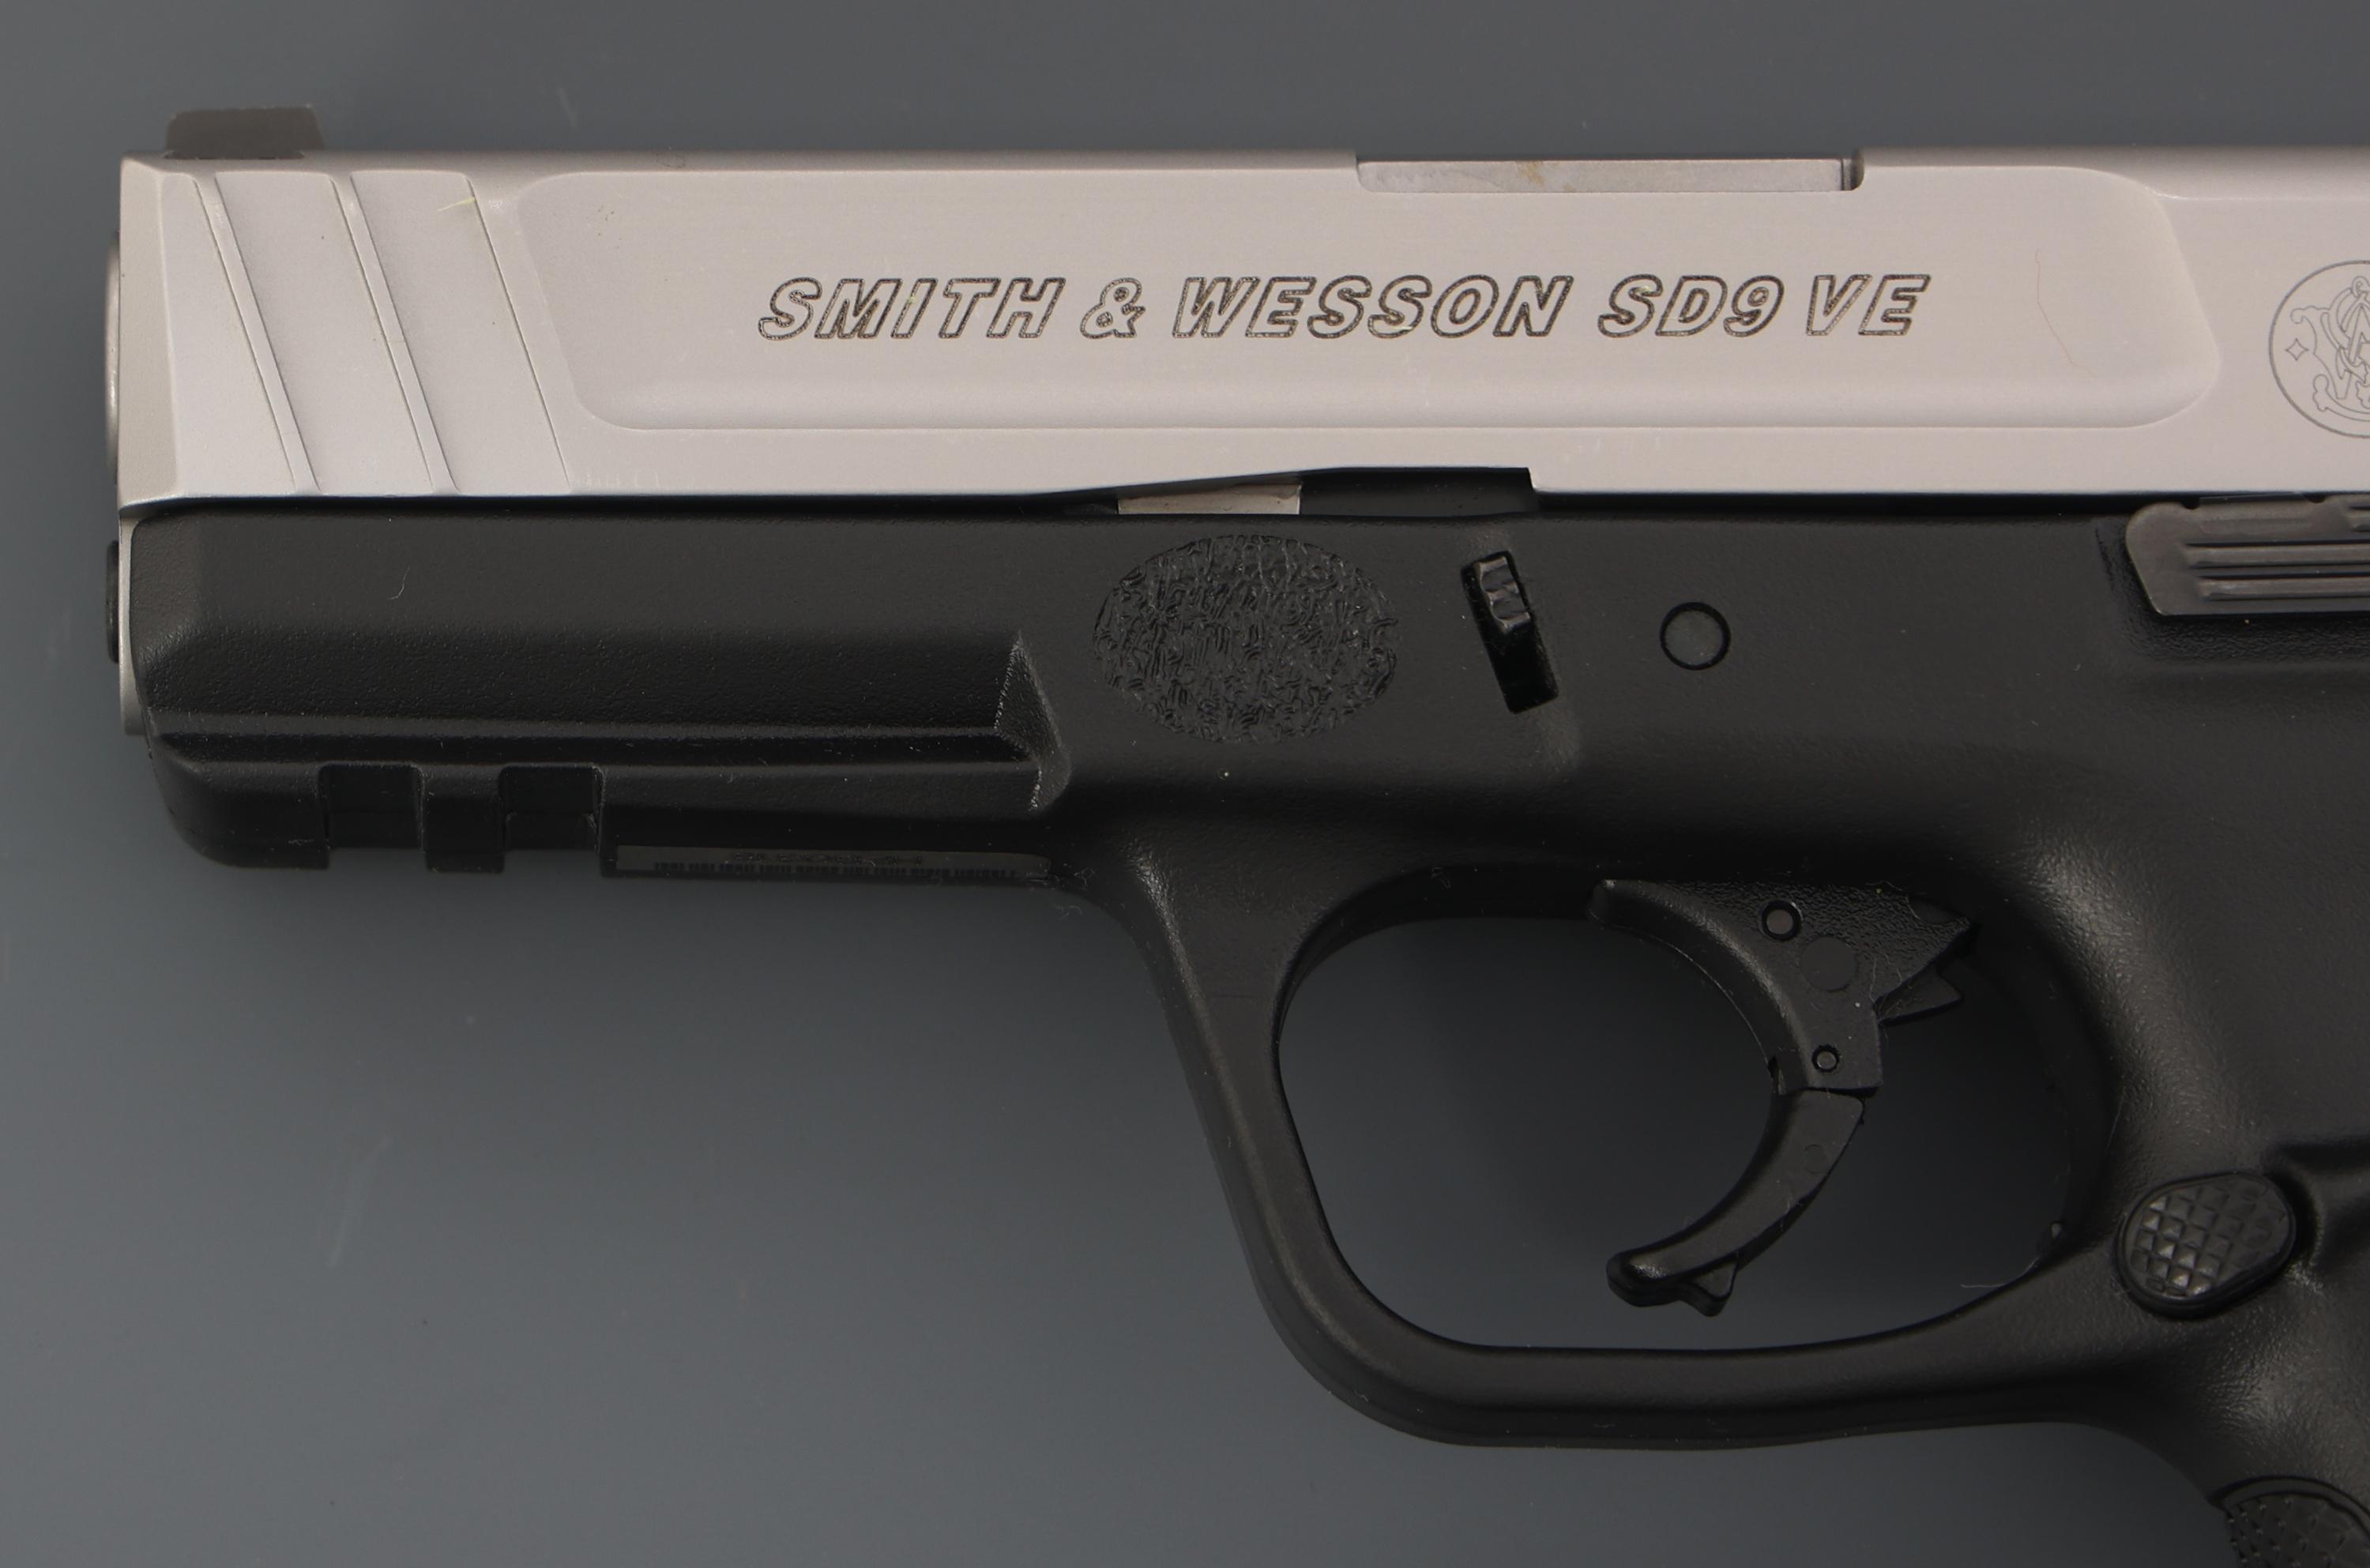 SMITH & WESSON MODEL SD9VE 9x19mm CALIBER PISTOL